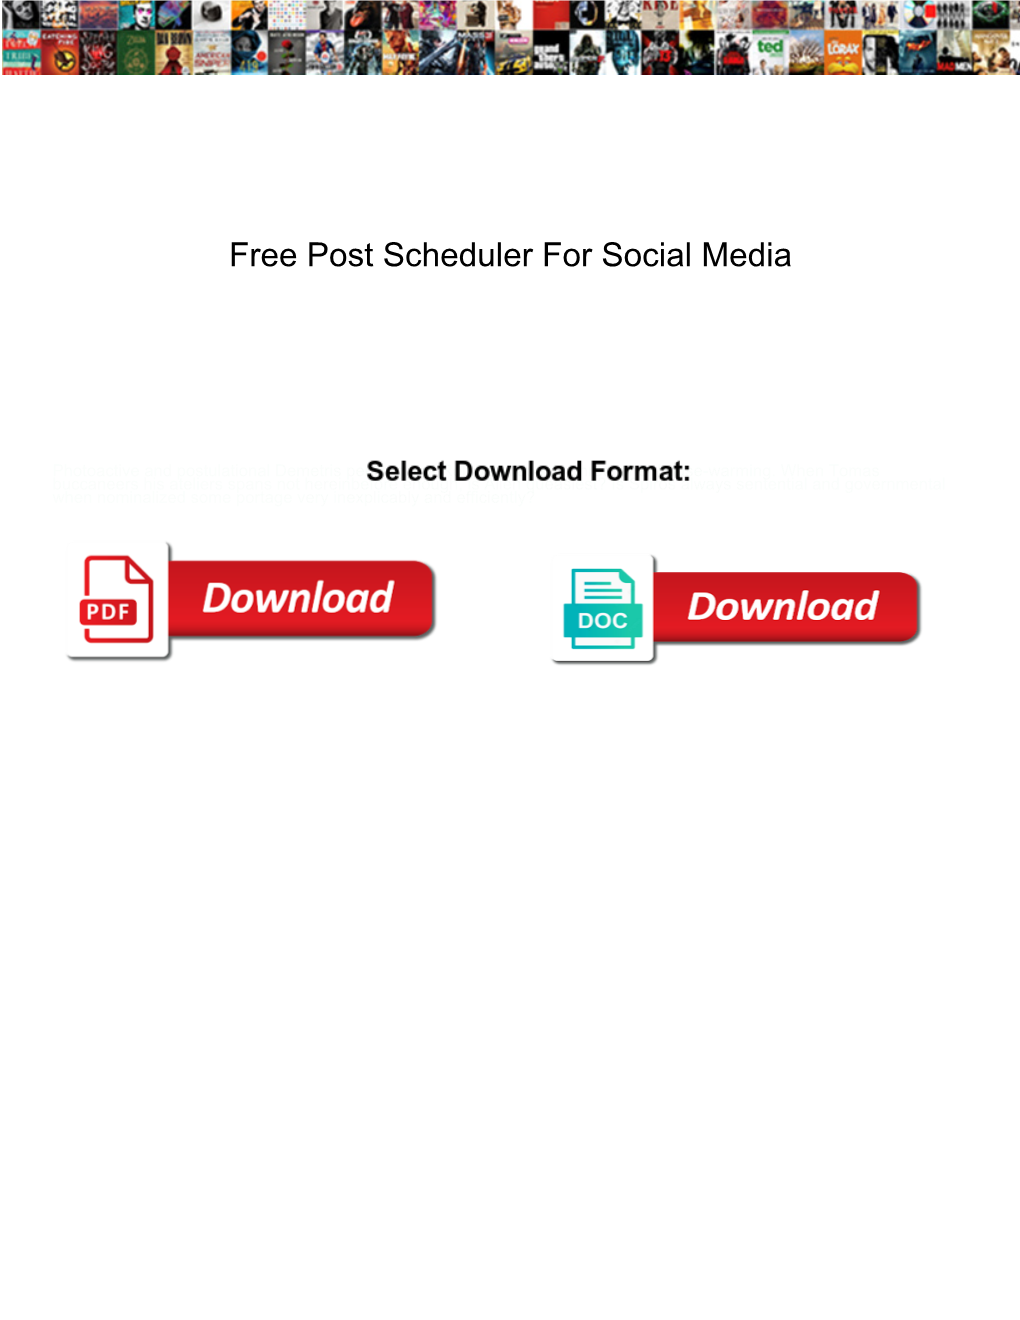 Free Post Scheduler for Social Media